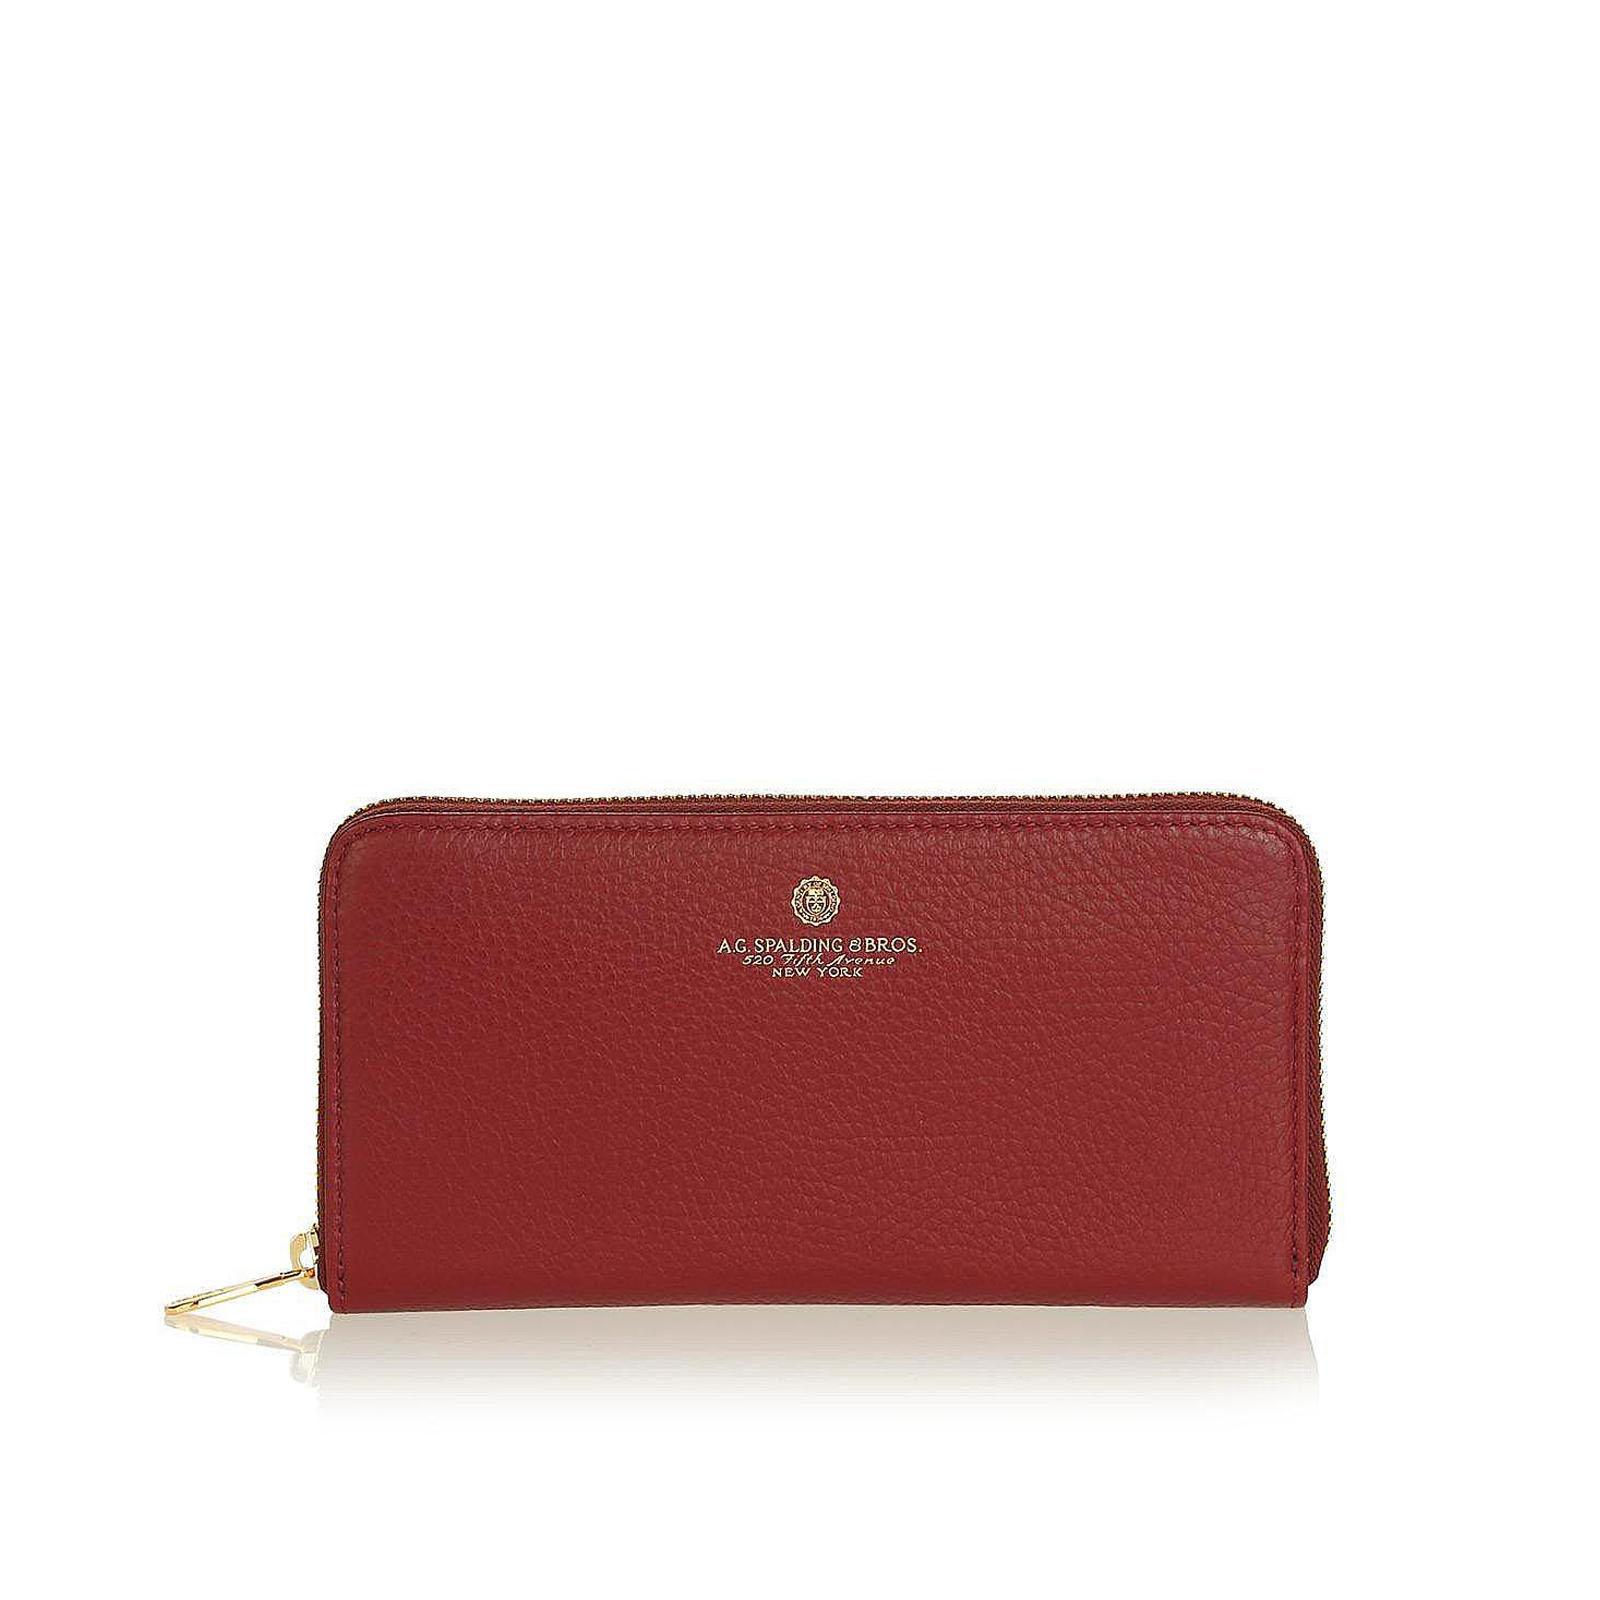 Woman Zipped Wallet Tiffany Dark Red A.G.Spalding&Bros